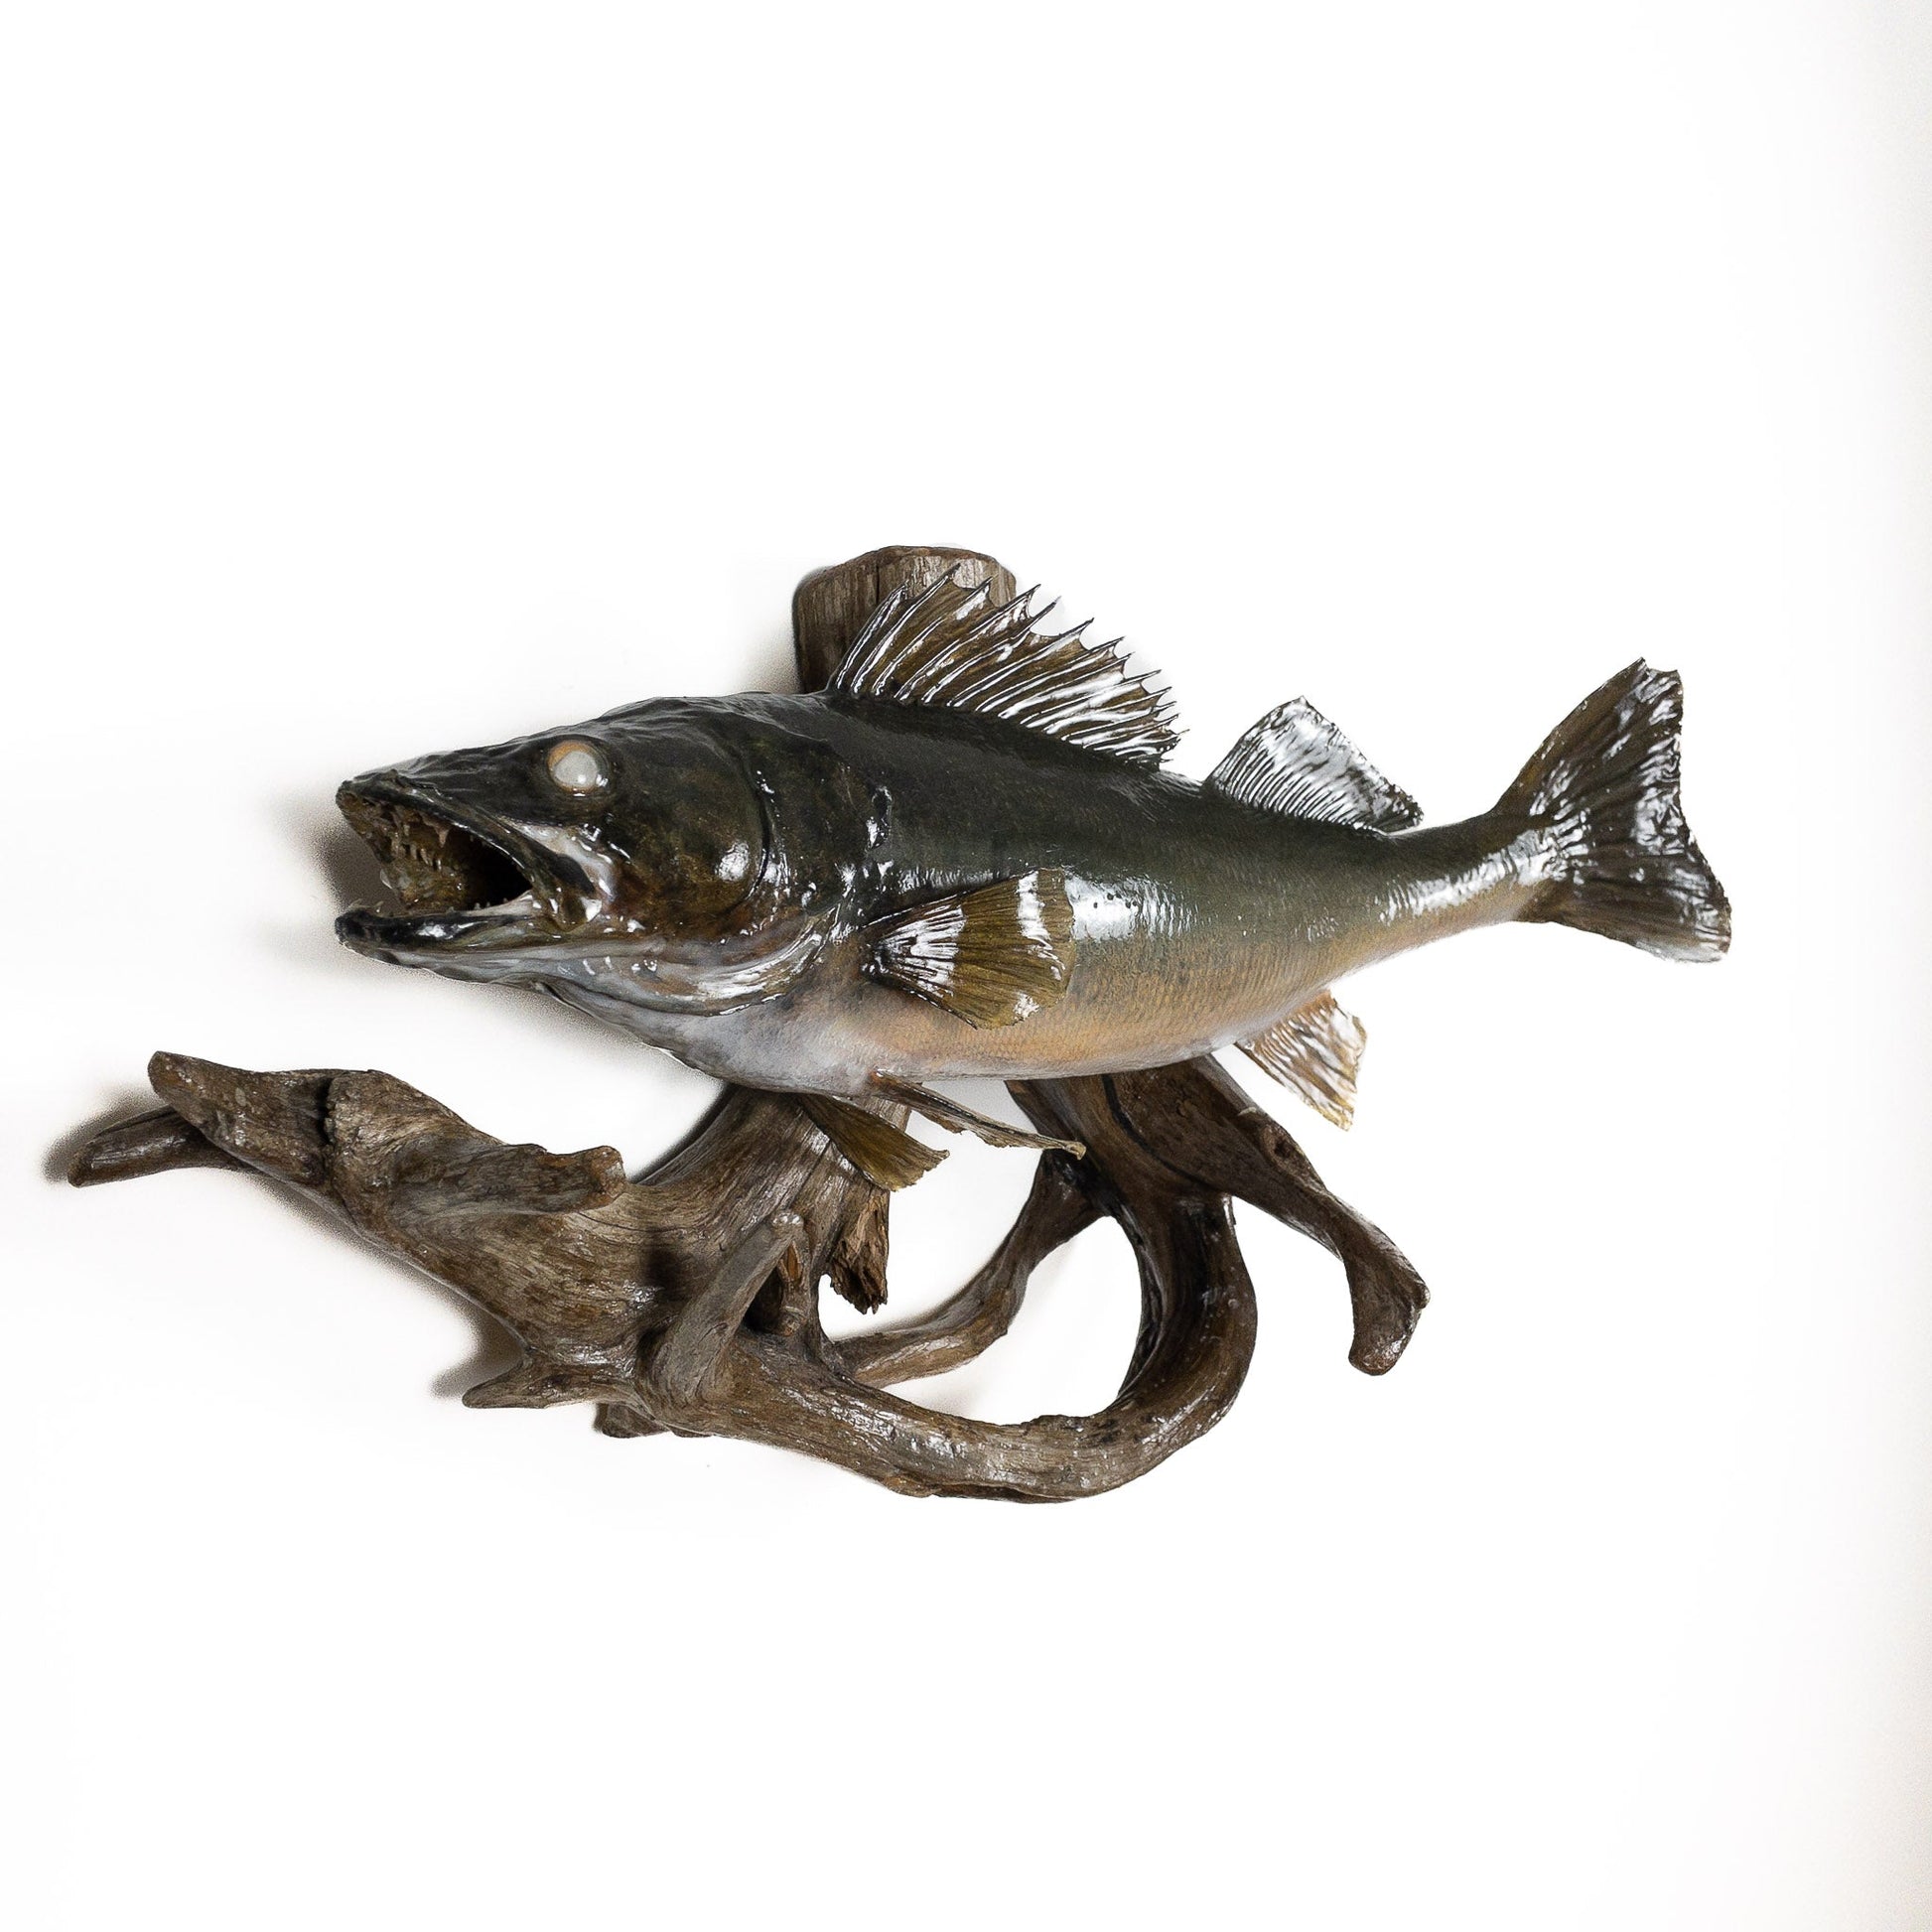 A Home Decor Taxidermy Fish Mount Pickerelof Grade Remarkable